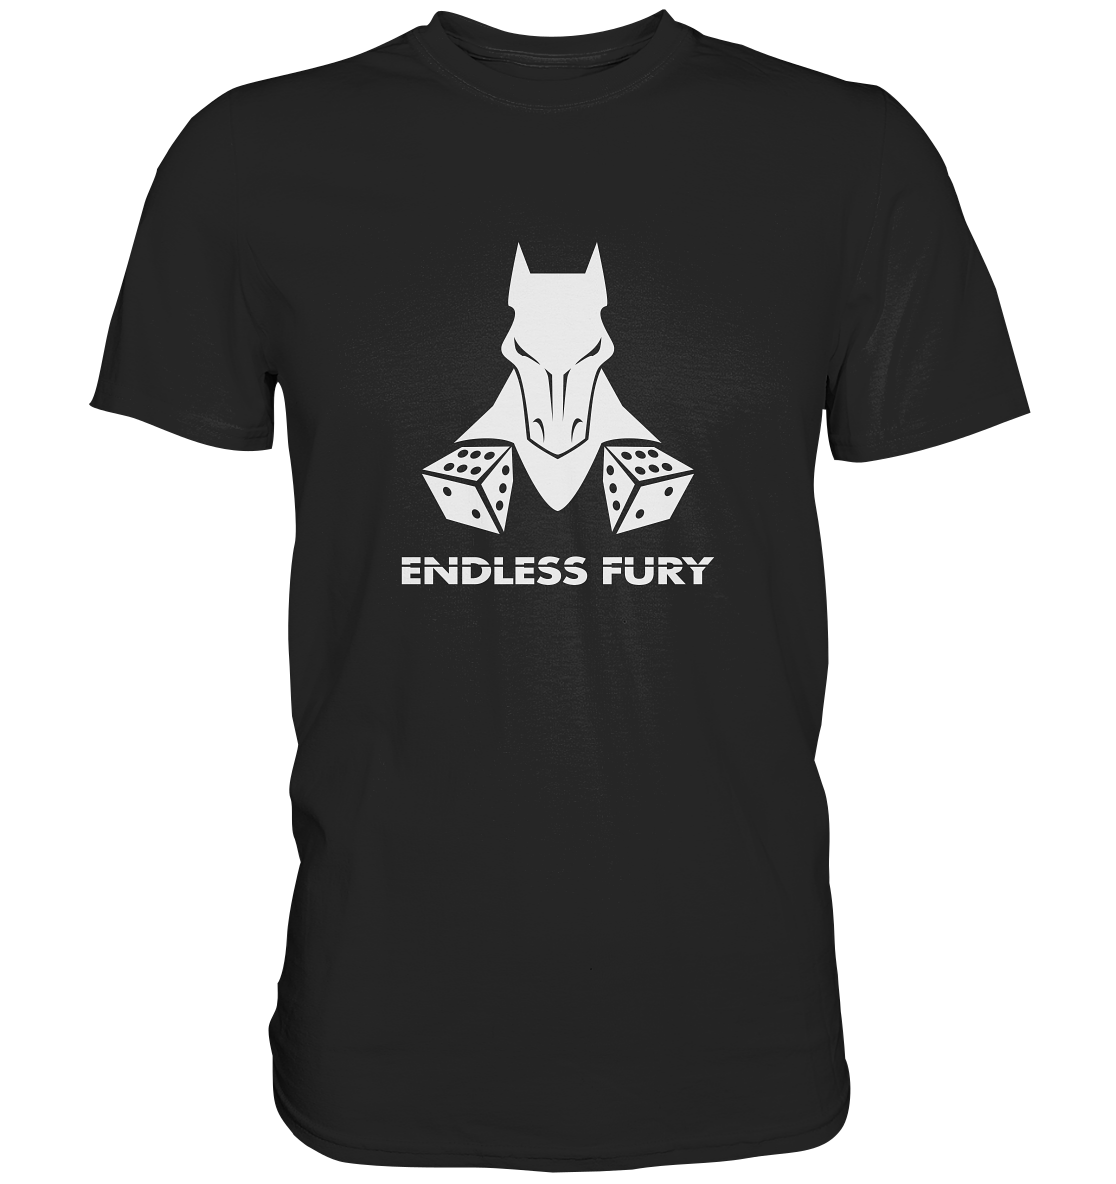 ENDLESS FURY WHITE - Basic Shirt